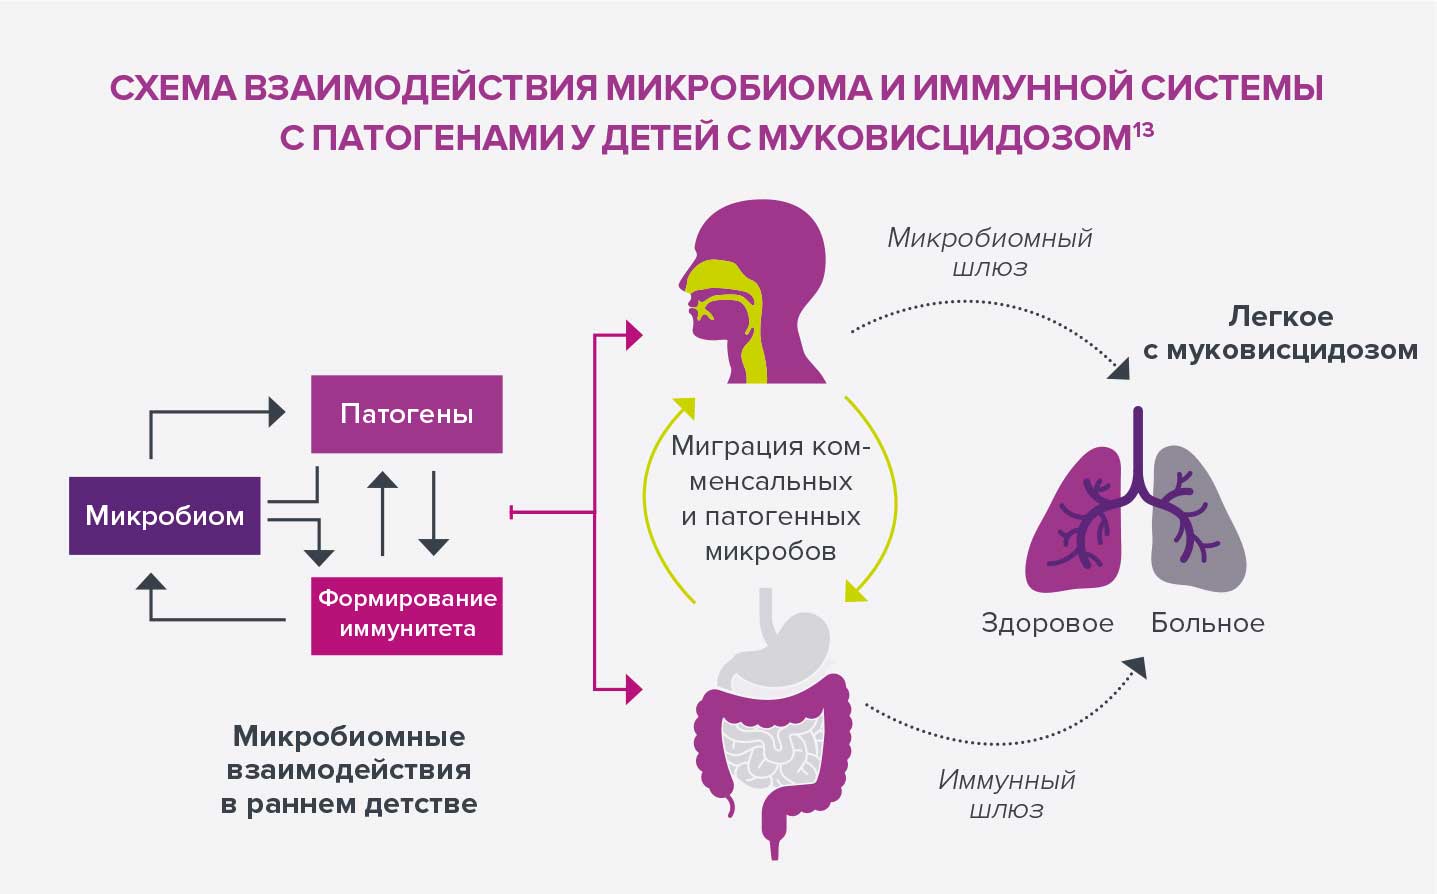 Respiratory-microbiota-RU-infographie-1